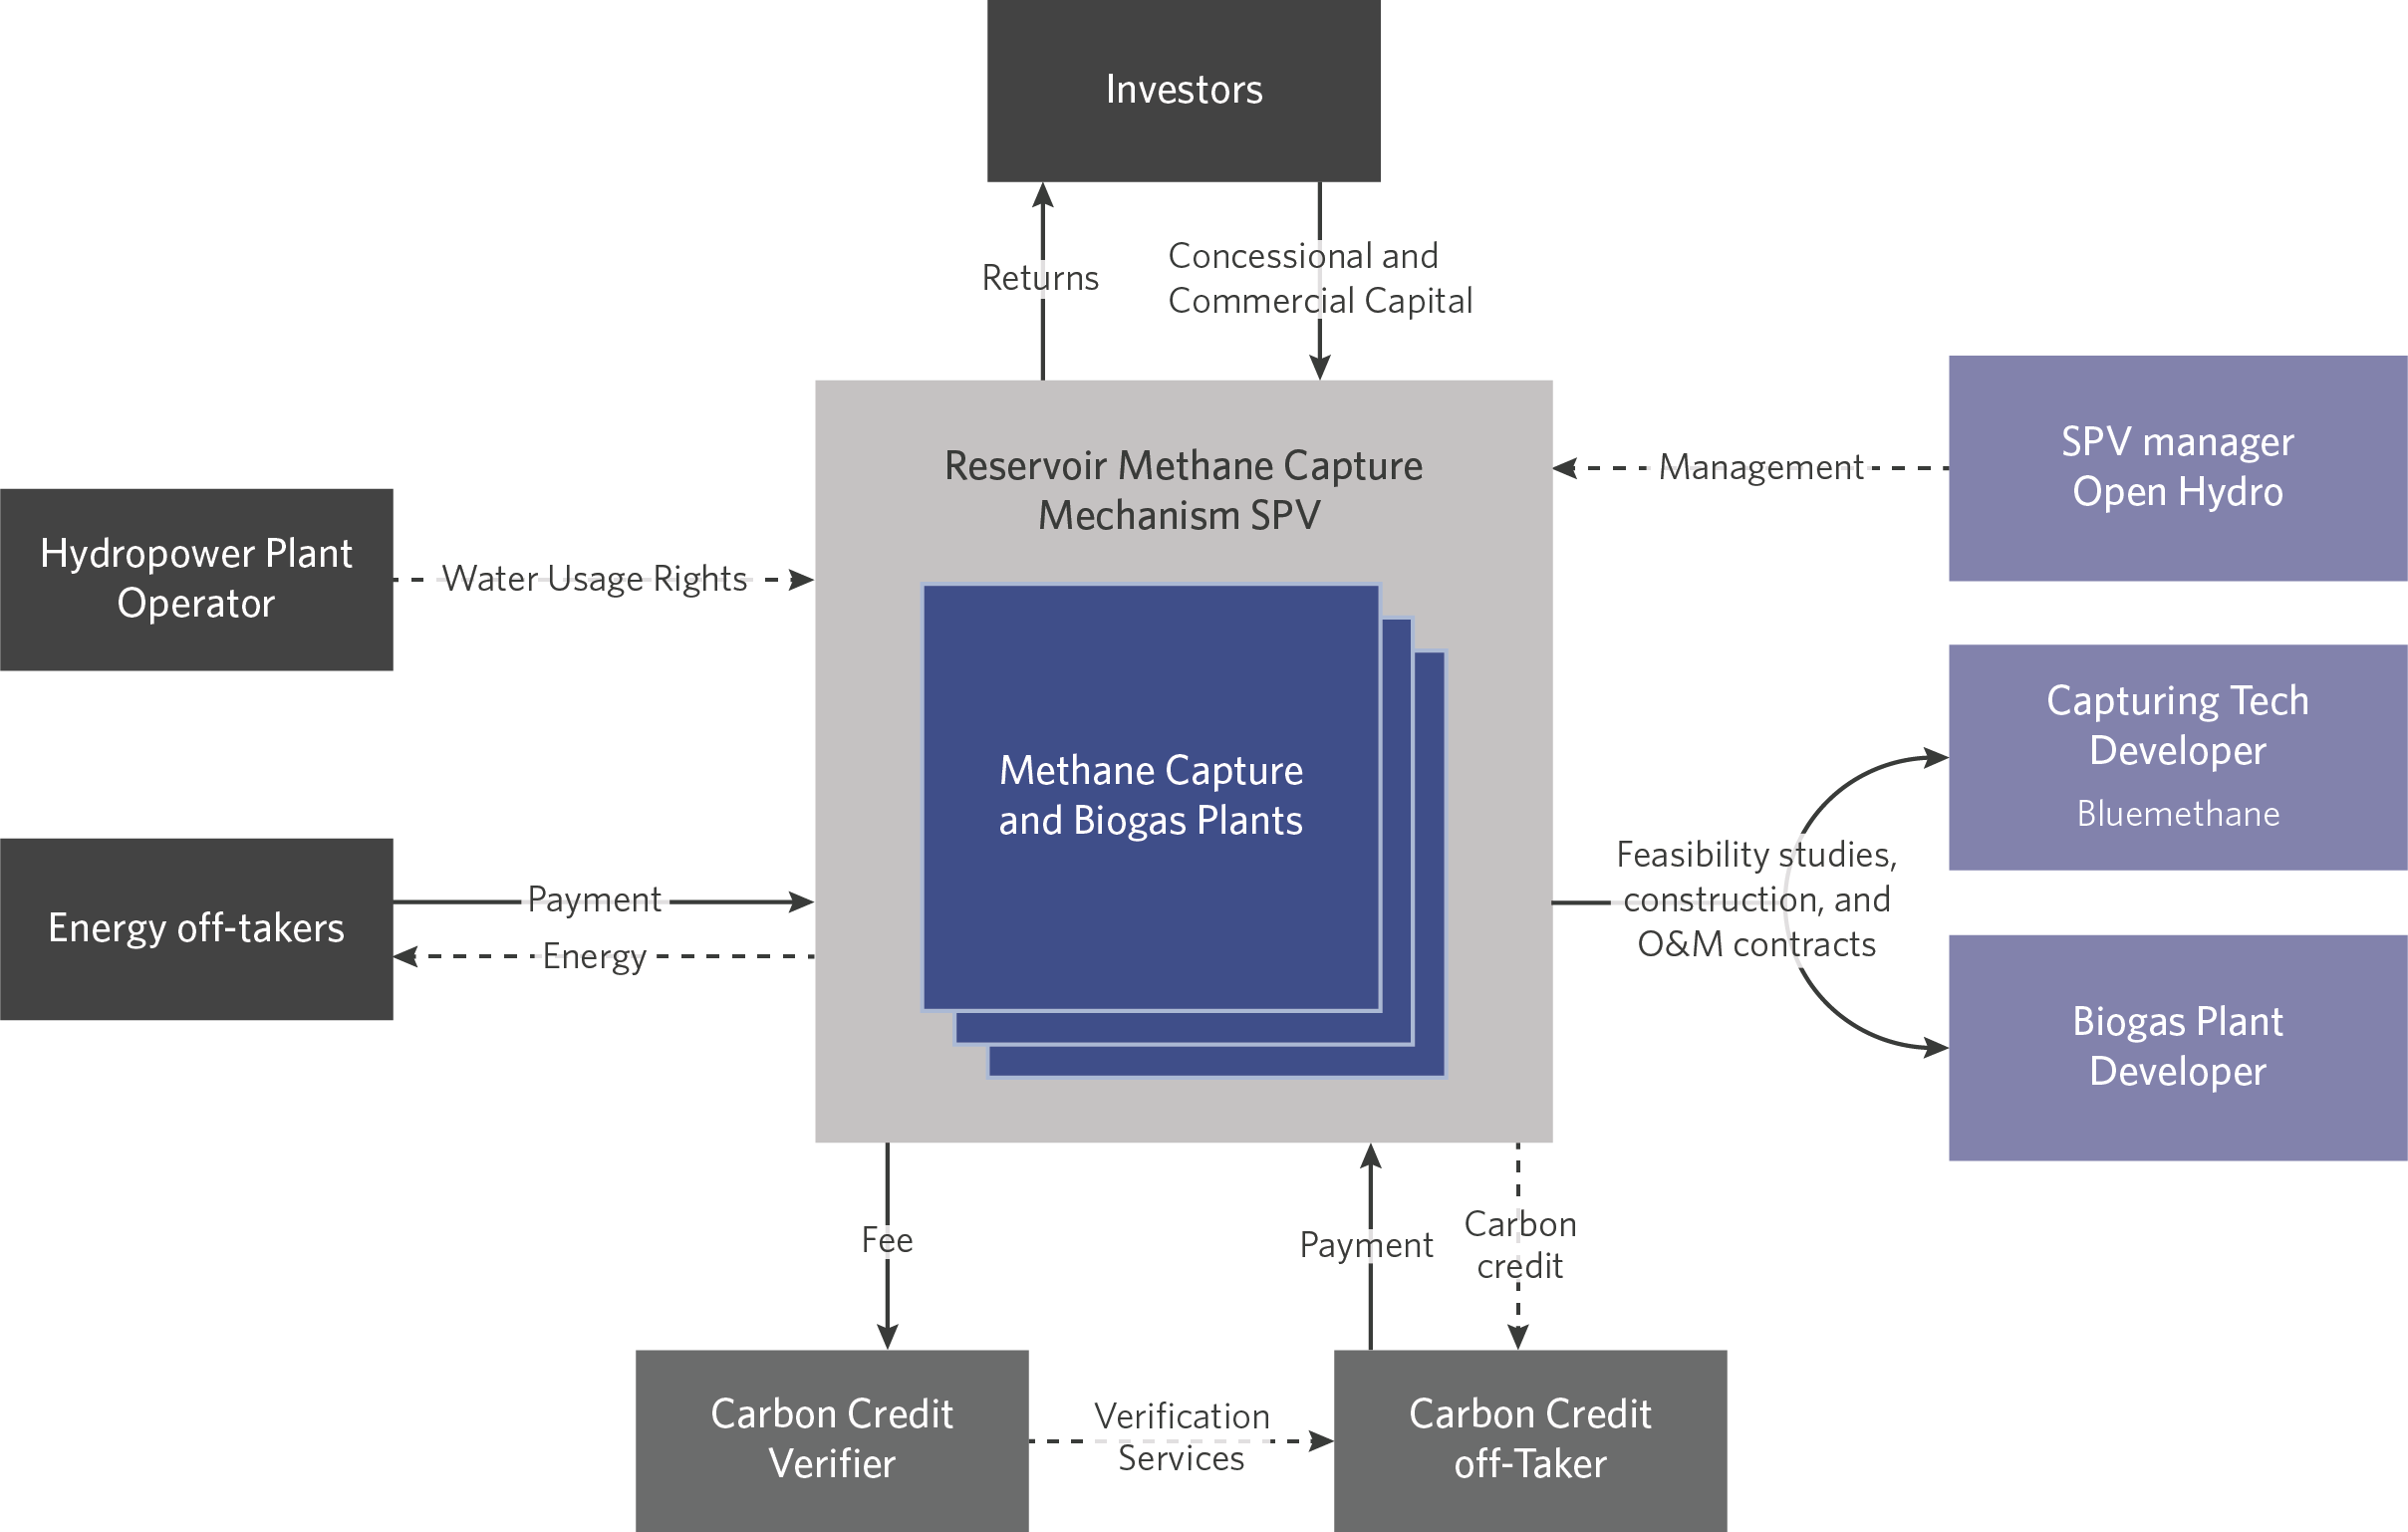 Reservoir Methane Capture Mechanism - Instrument Mechanics